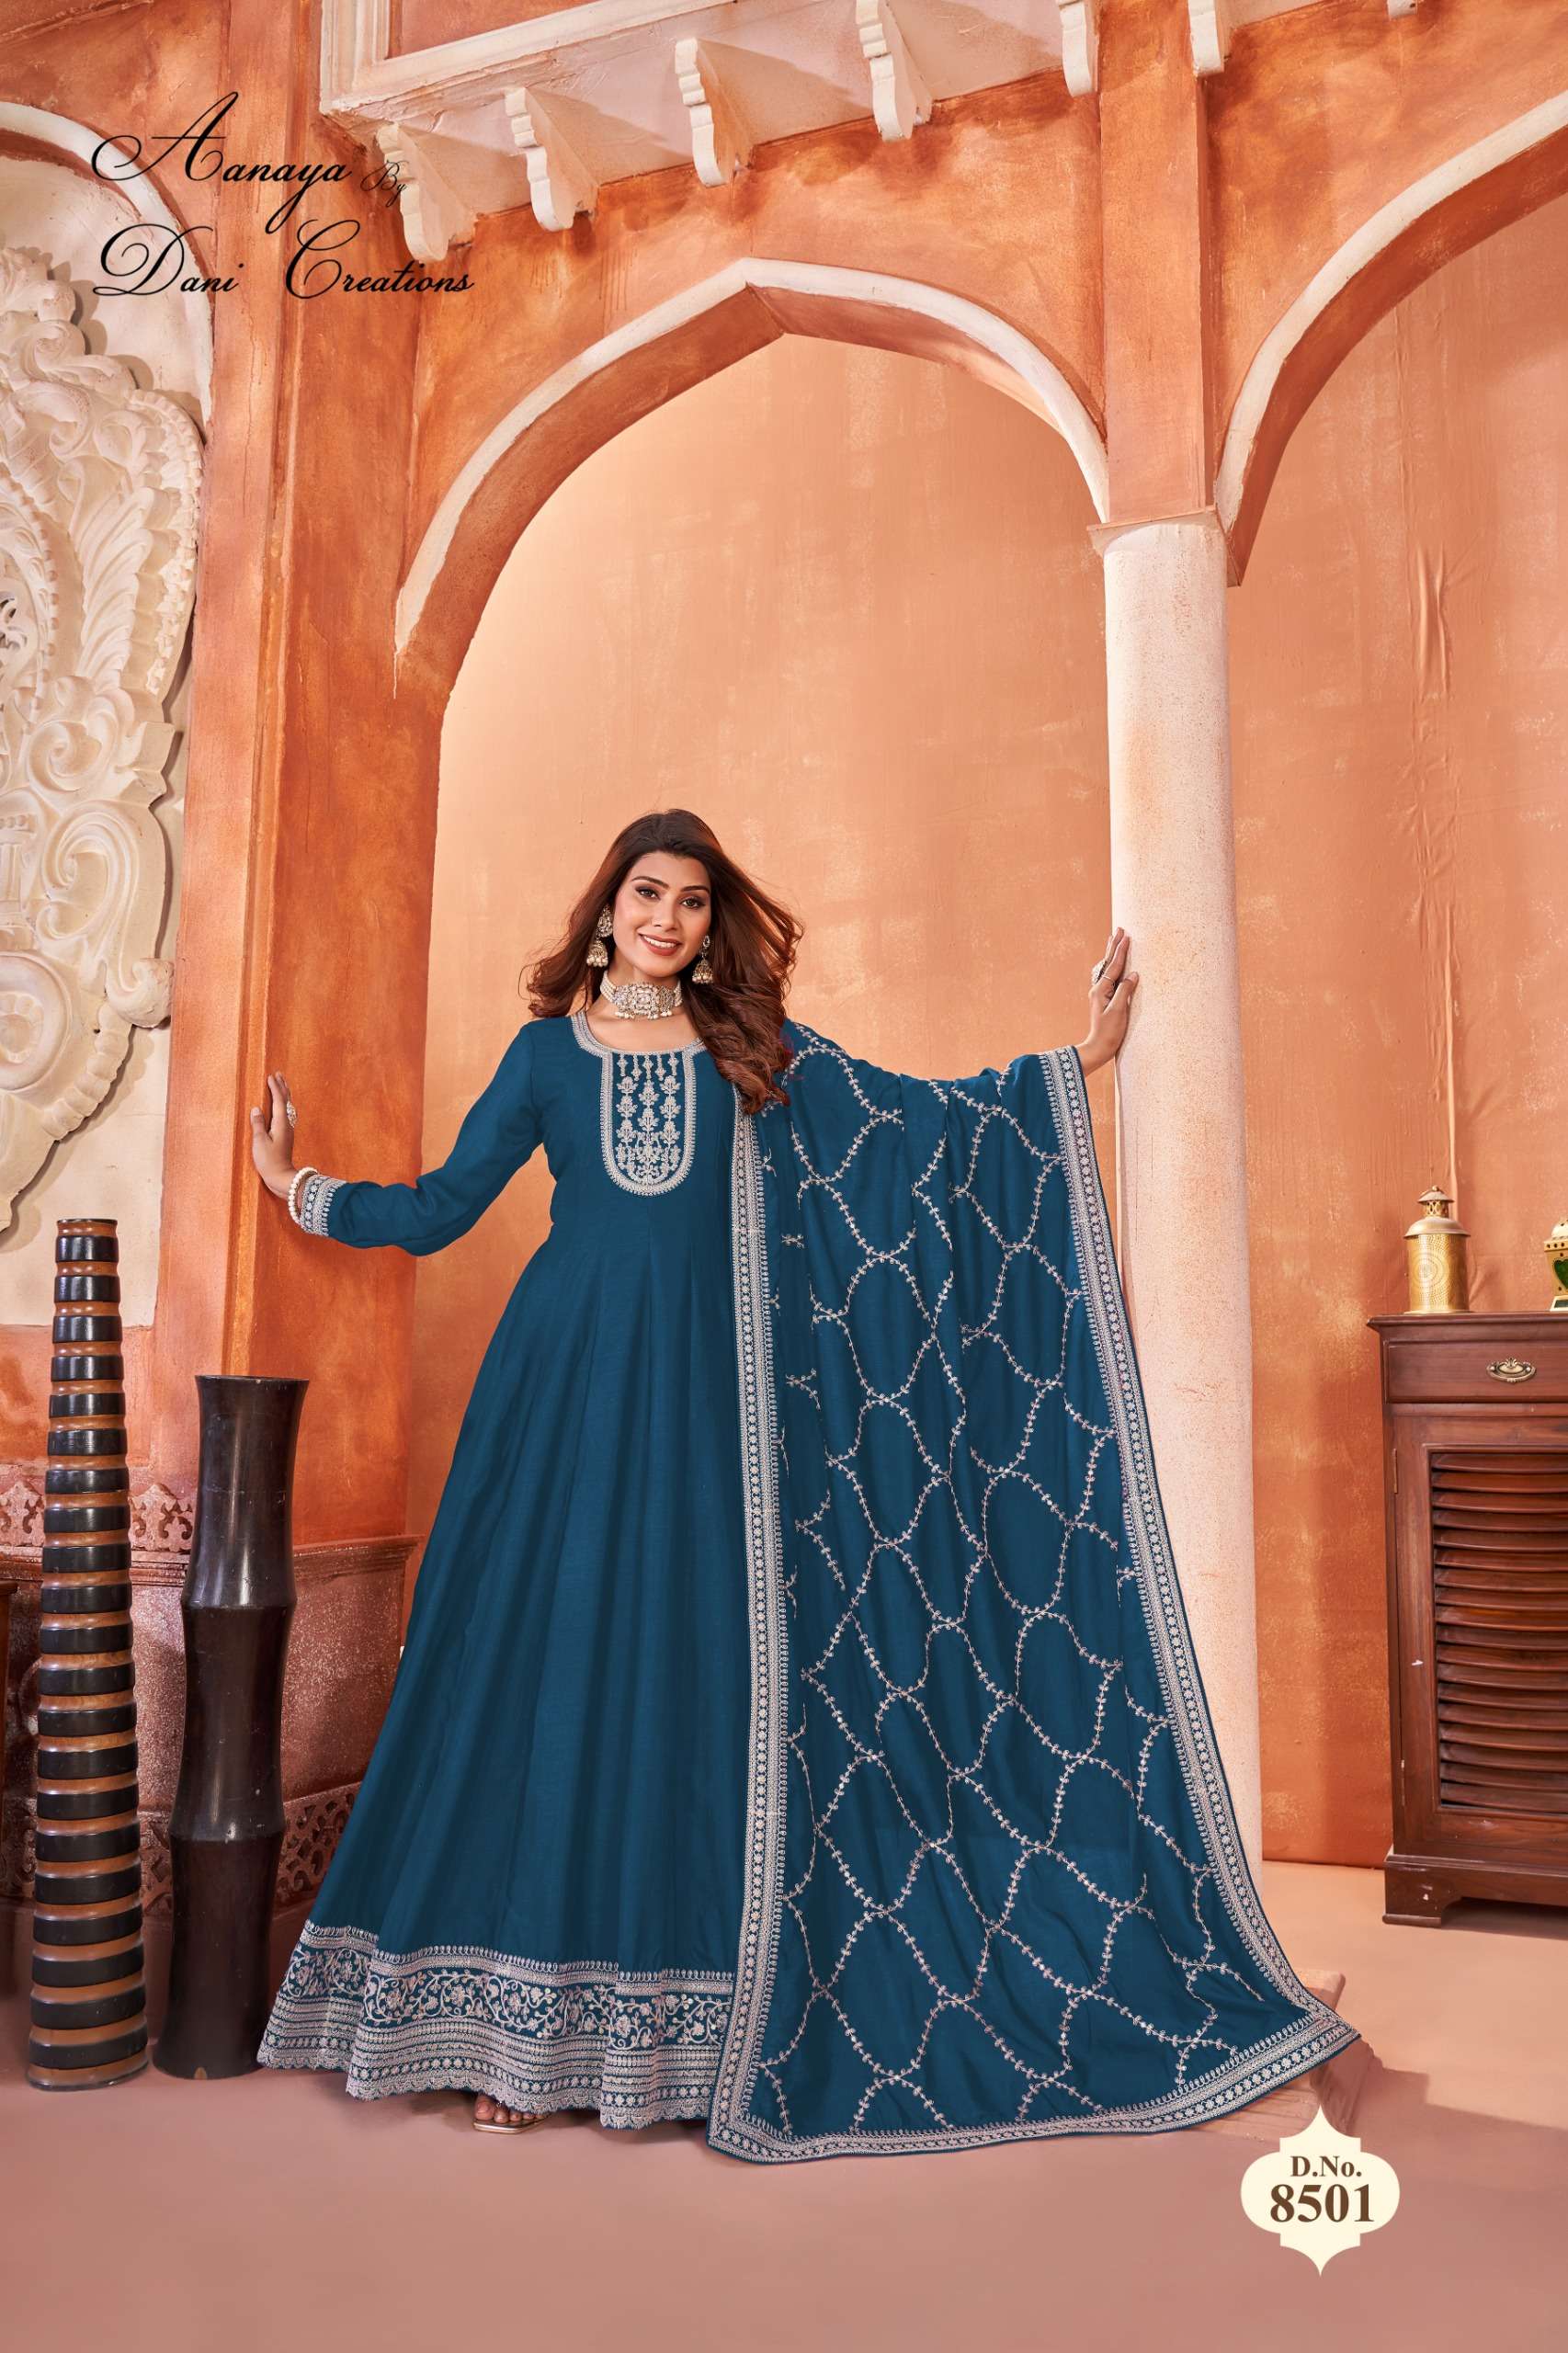 dani aanaya vol 185 art silk innovative look salwar suit catalog